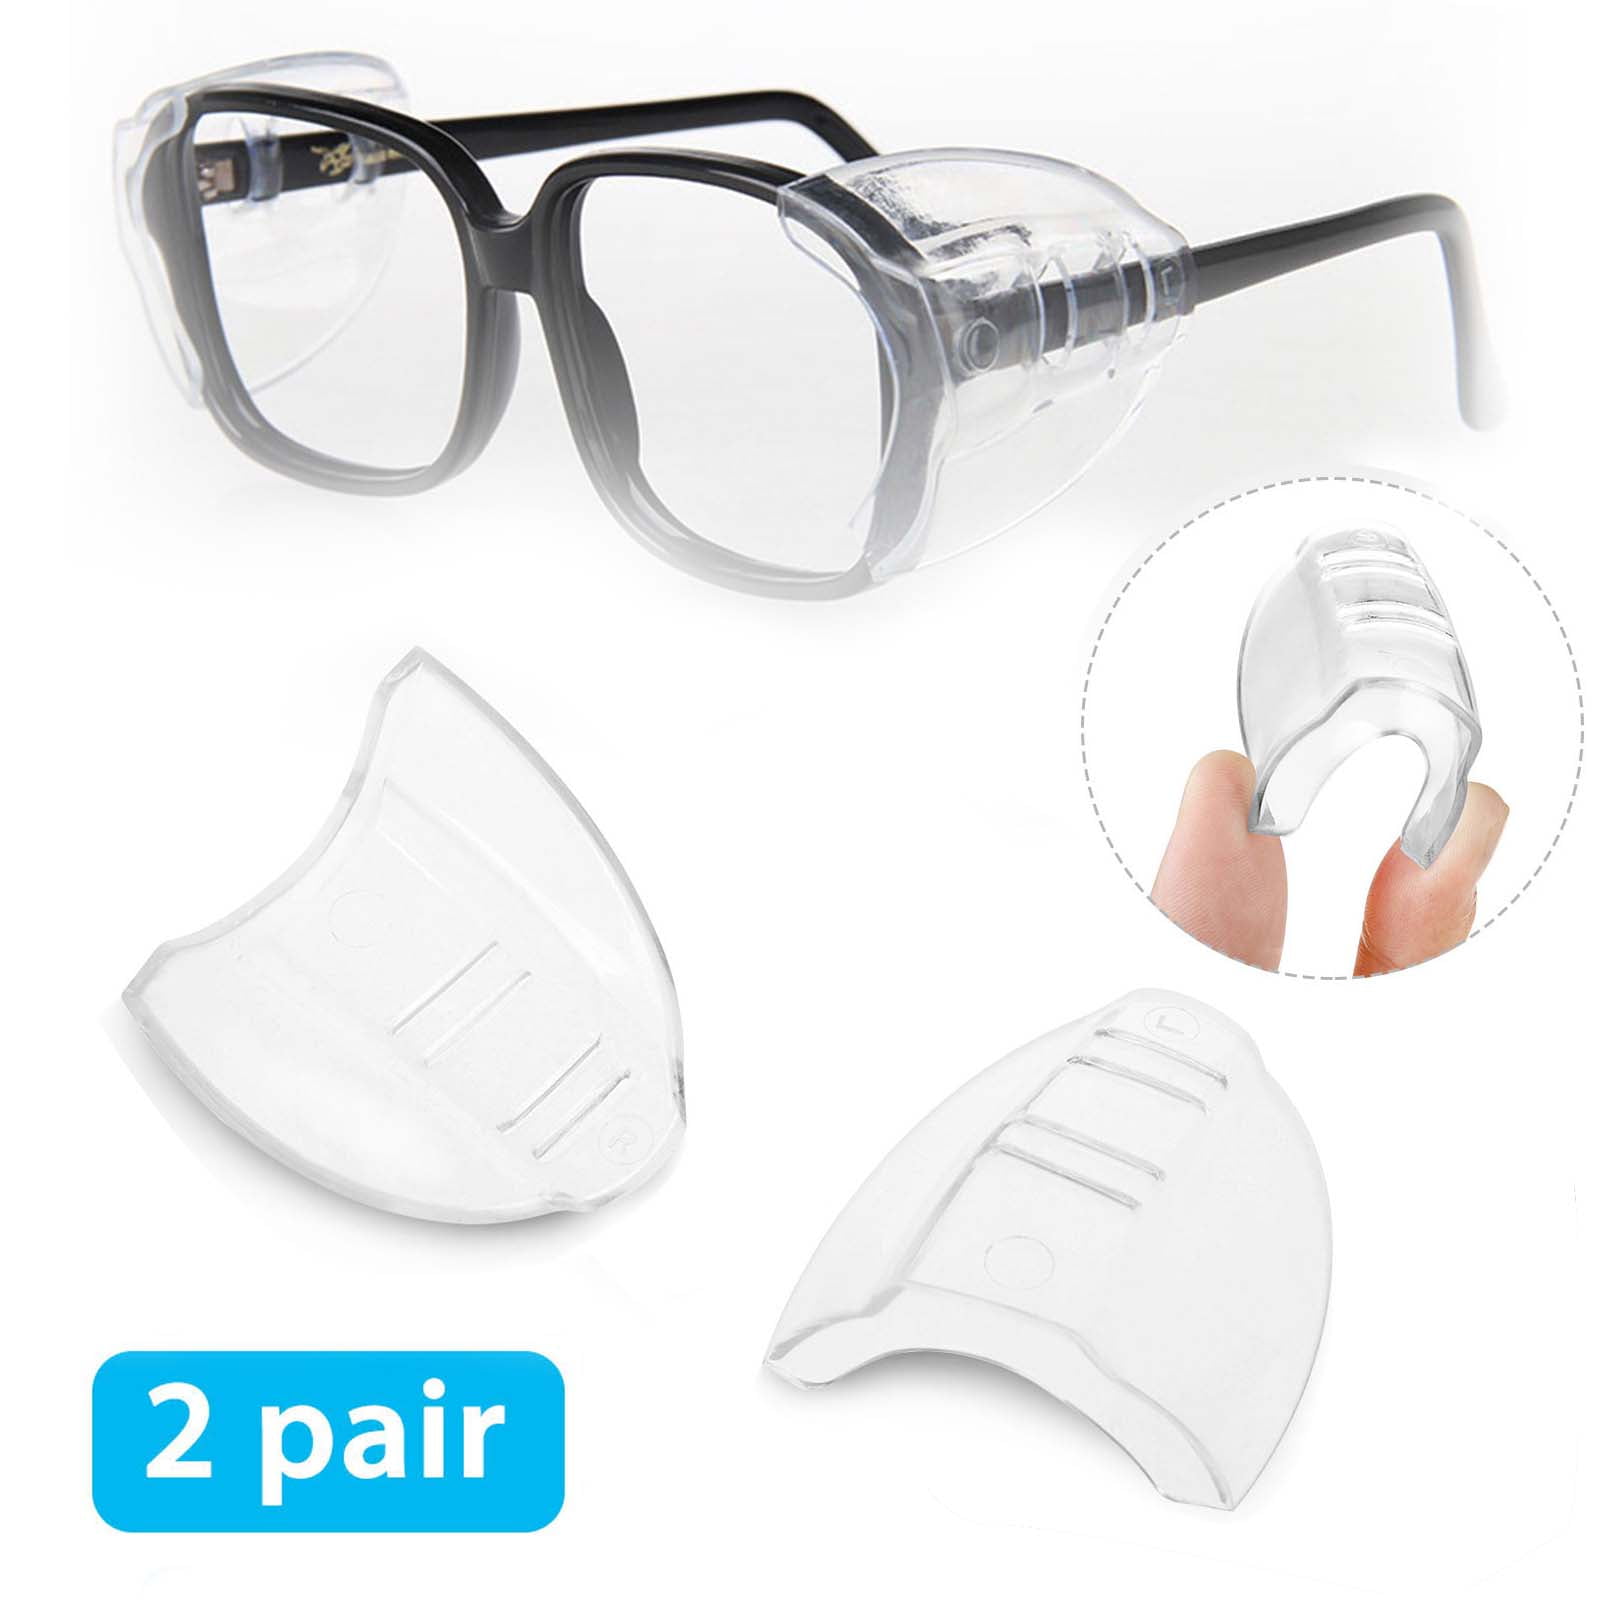 4Pcs Clear Safety Eye Glasses Side Shields For Glasses Slip-On Flexible new 